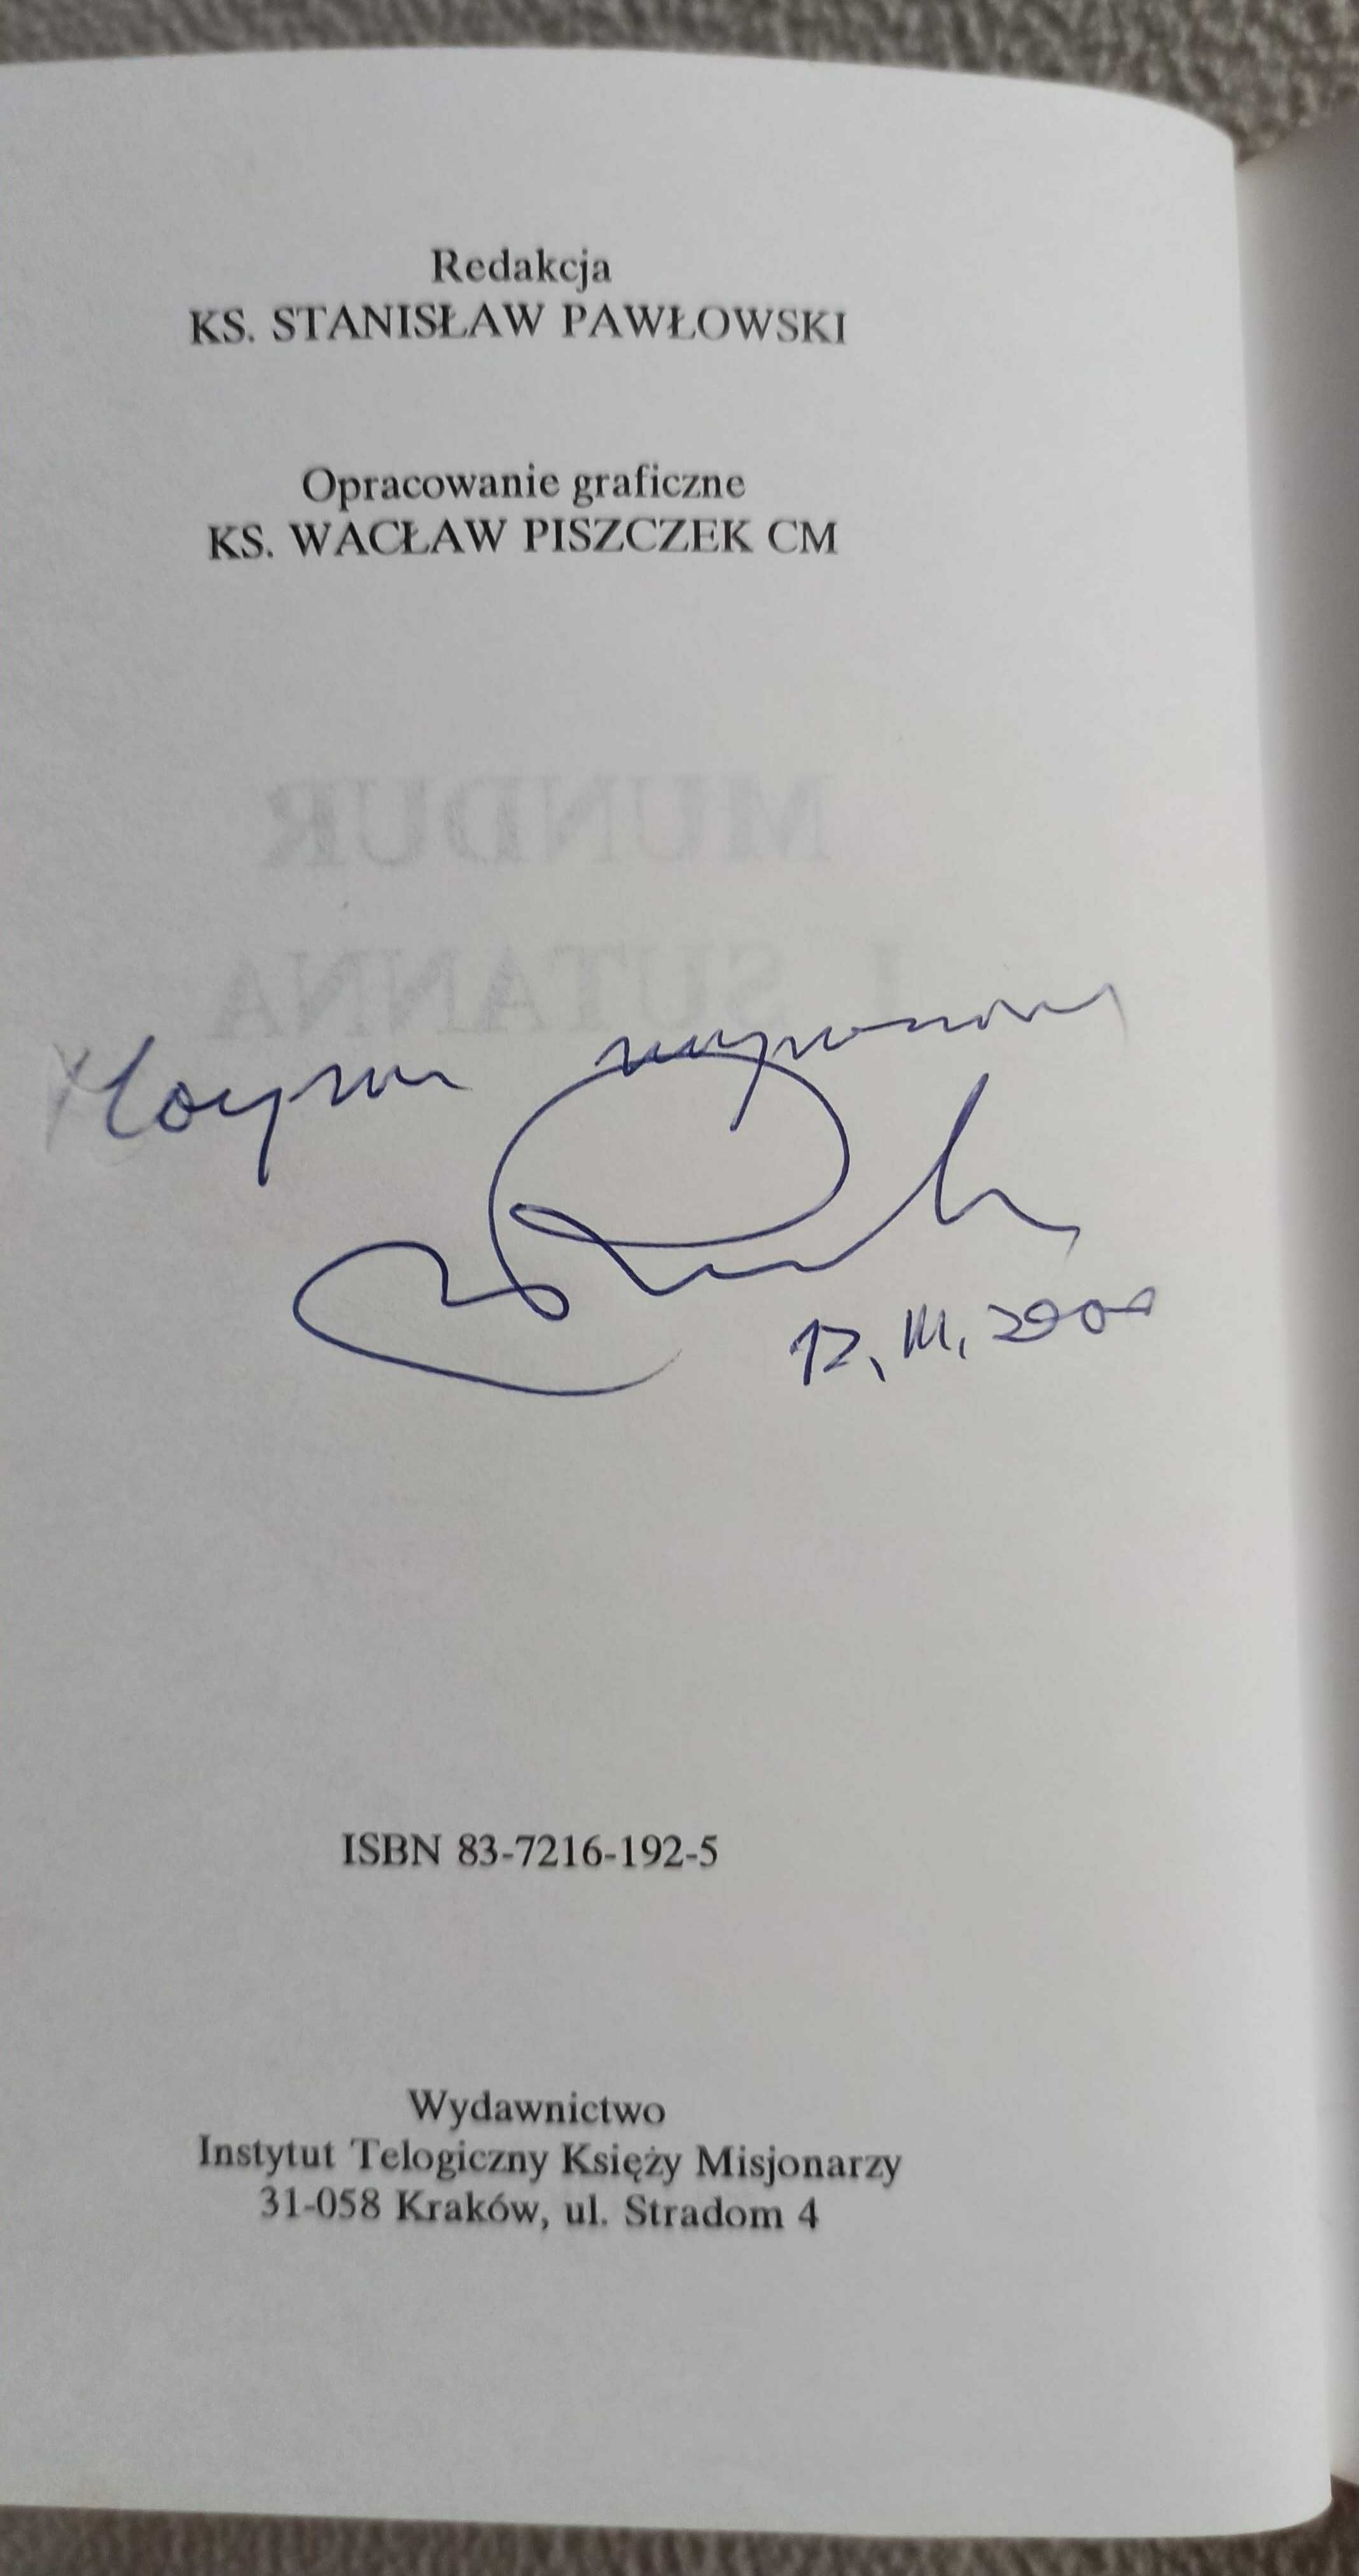 Mundur i sutanna Red. KS. Stanisław Pawłowski autograf autora